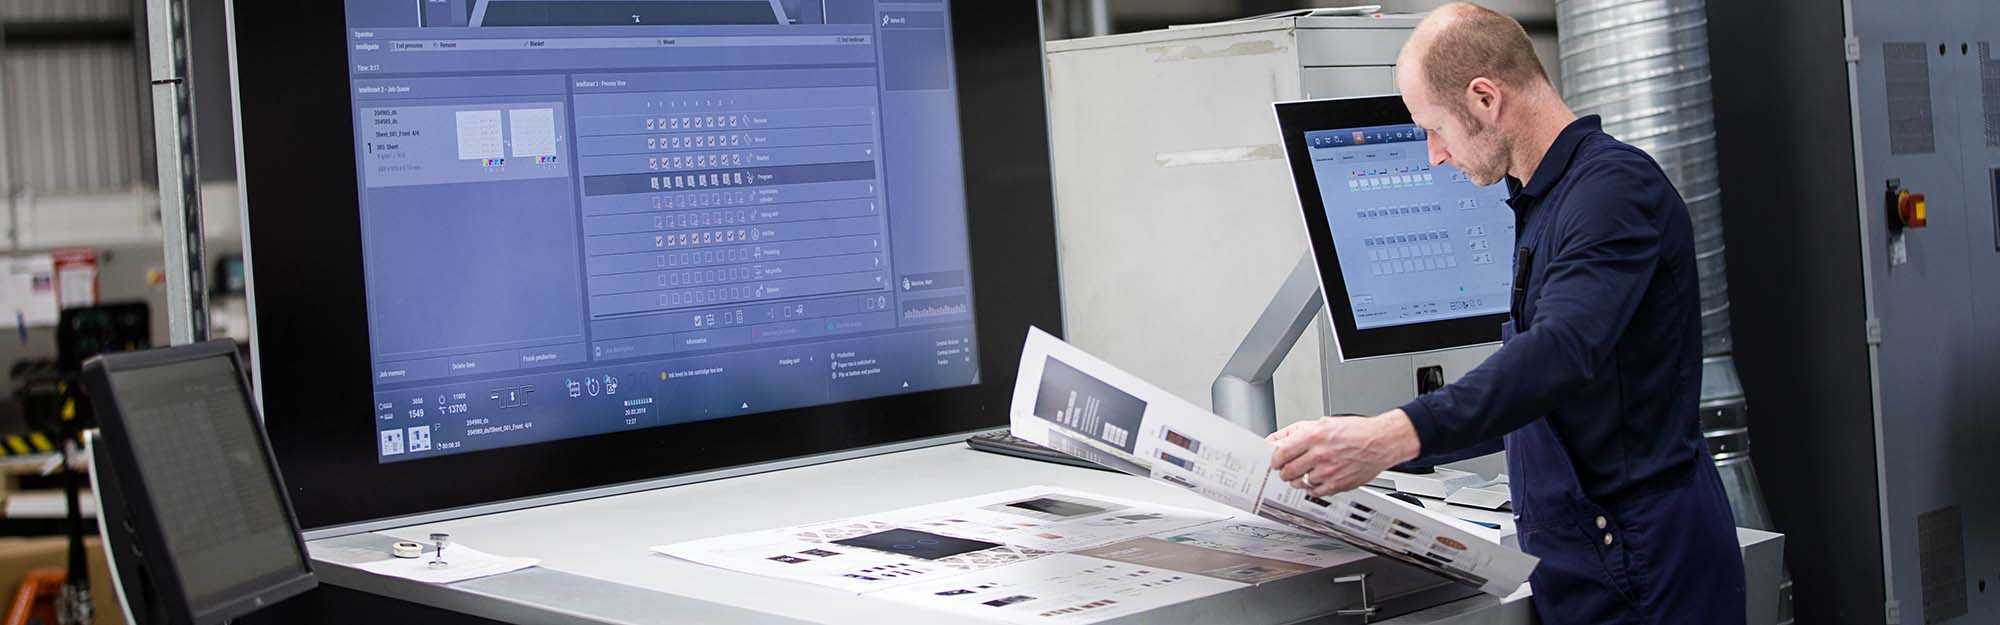 Employee inspecting printing